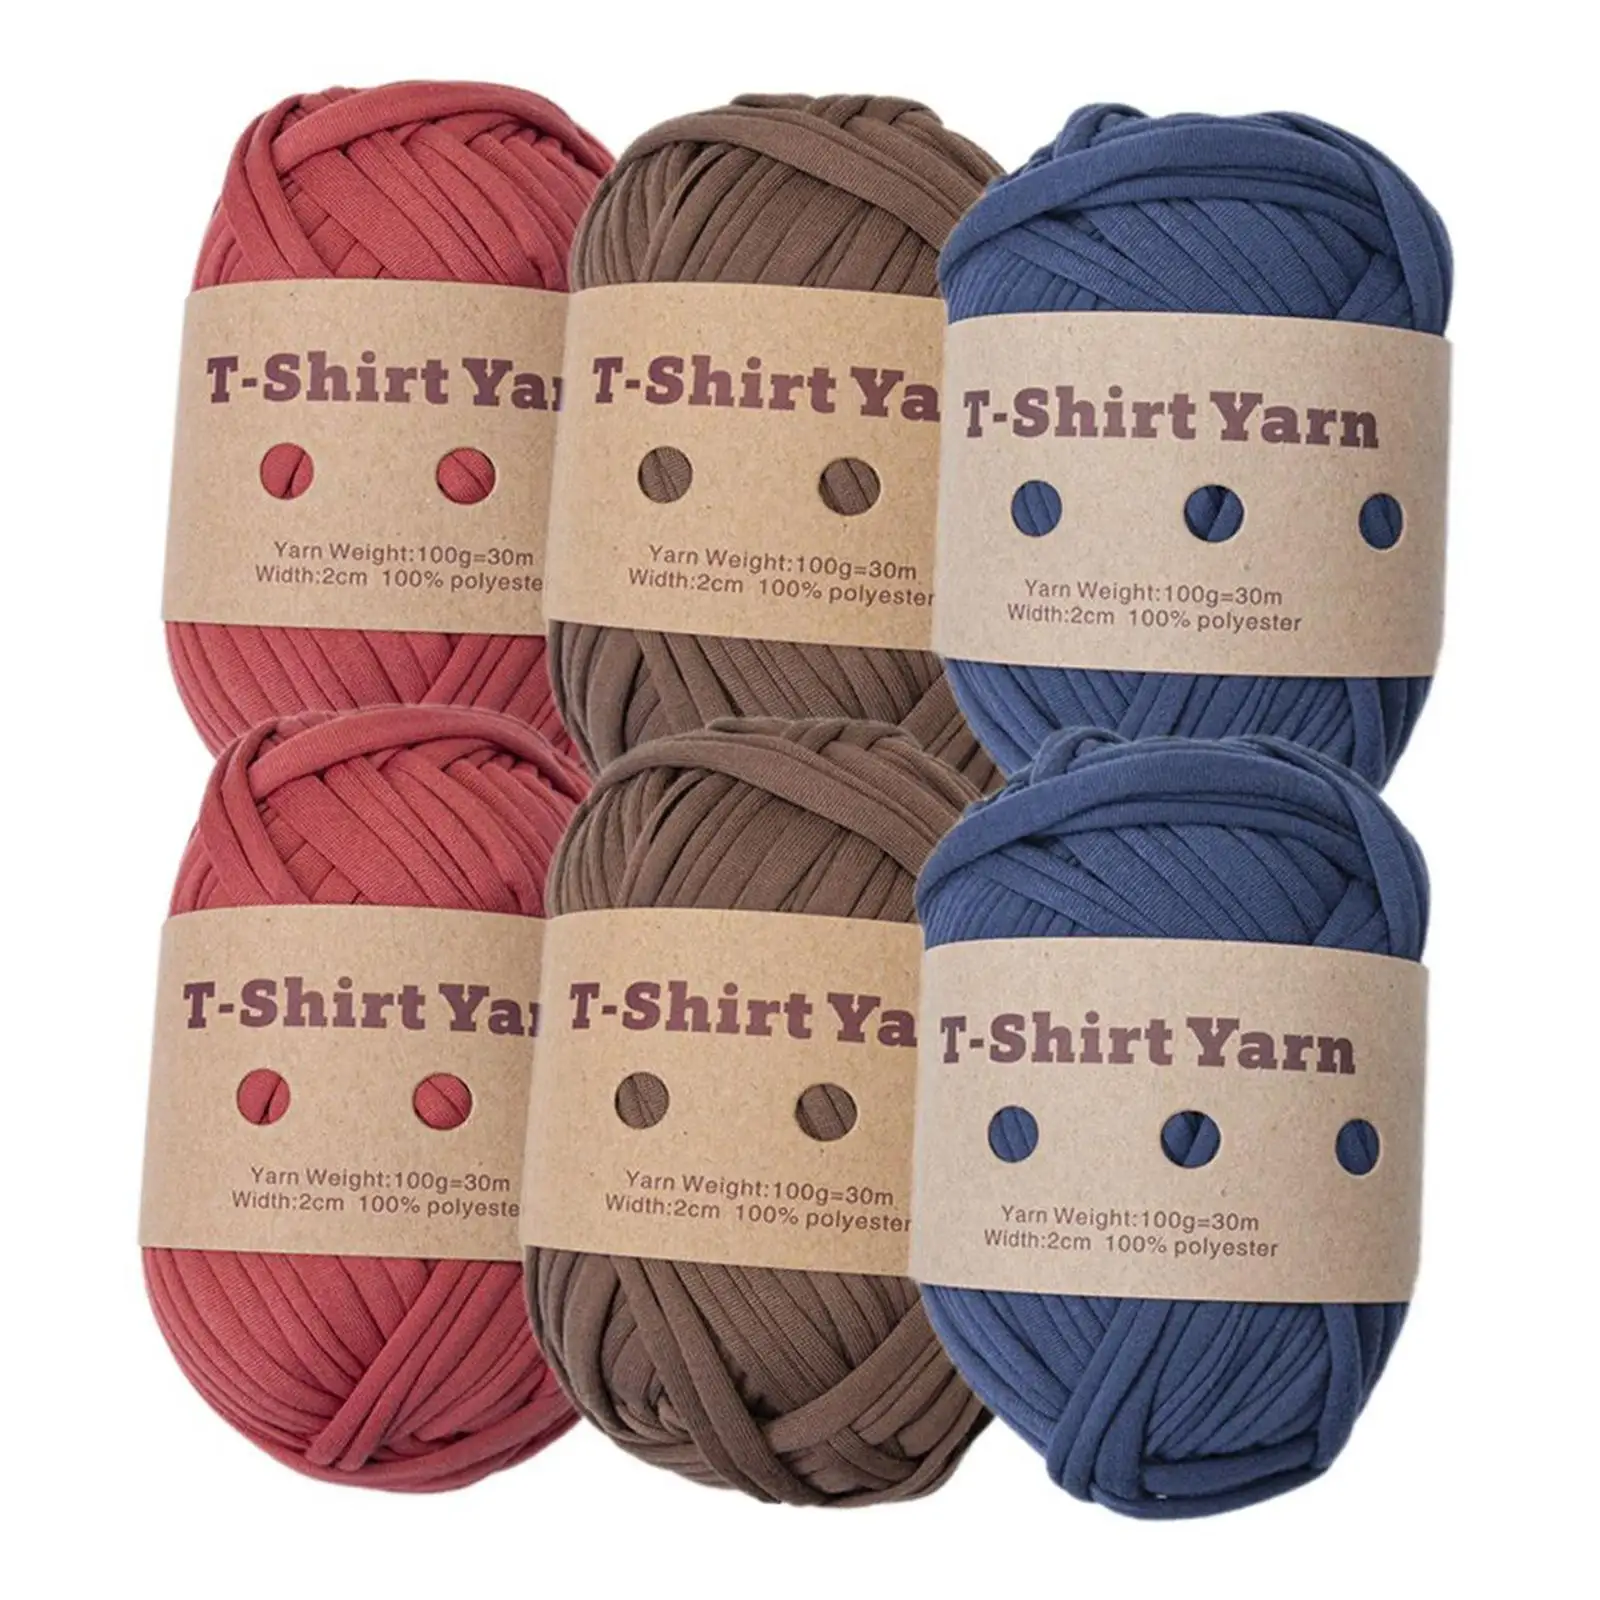 6x T Shirt Yarn Bag Making Supplies Crocheting Hand Knit Three Color Easy to